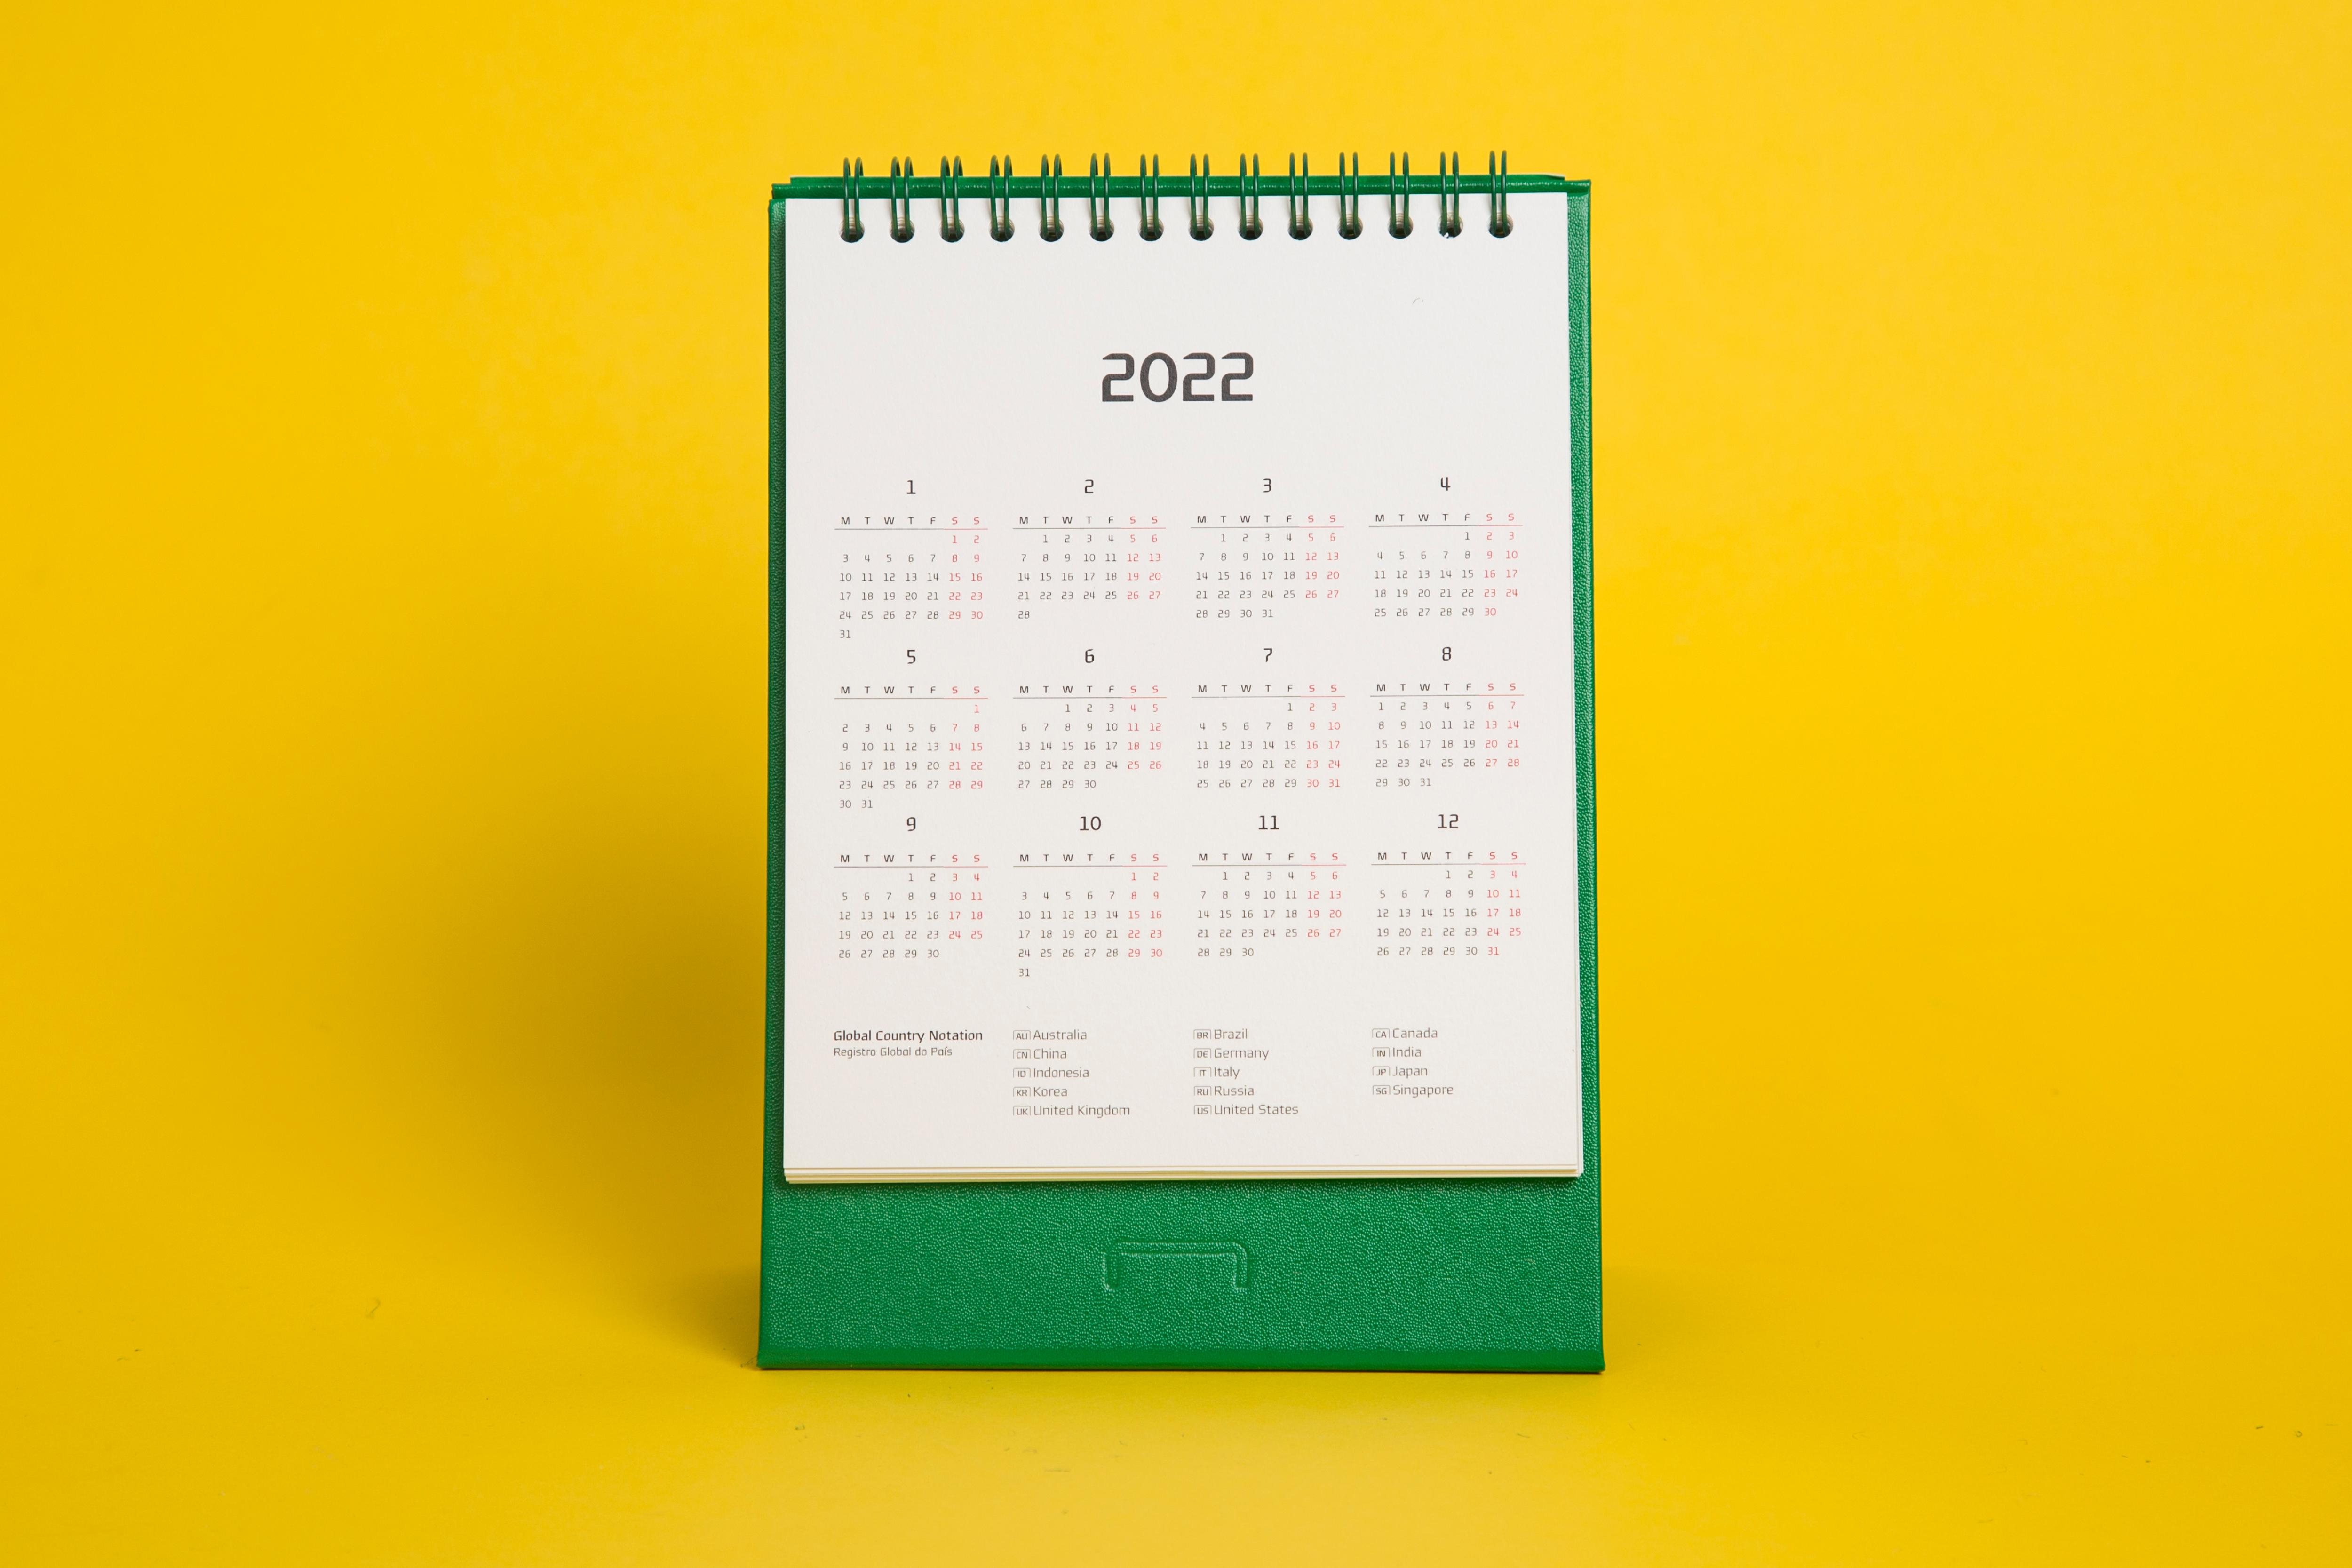 Hcc Fall 2022 Calendar Hyundai Card Calendar & Planner 2022 - Vadesign2